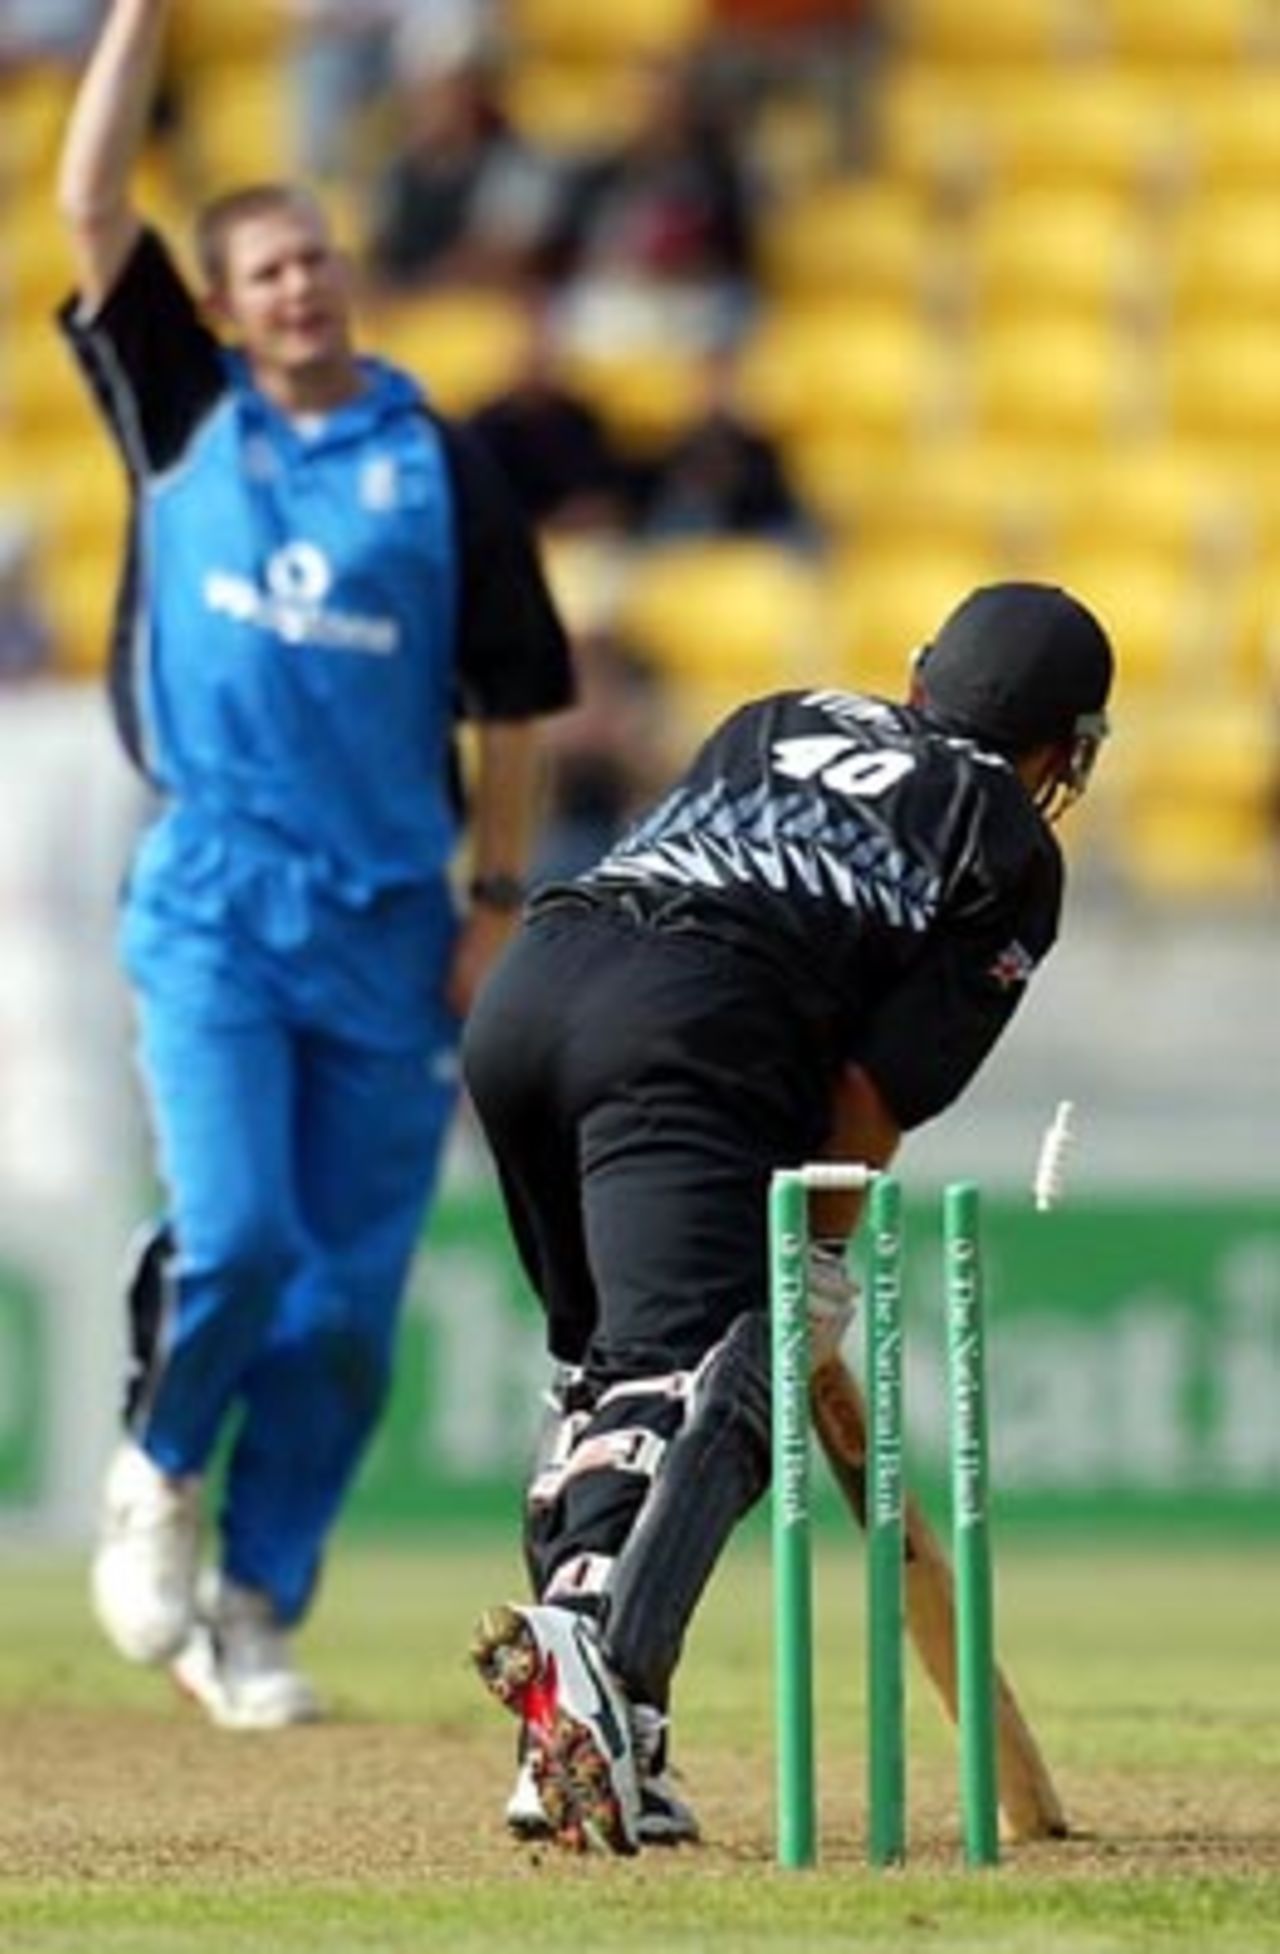 New Zealand batsman Lou Vincent is bowled by England bowler Matthew Hoggard for 36. 2nd ODI: New Zealand v England at WestpacTrust Stadium, Wellington, 16 February 2002.